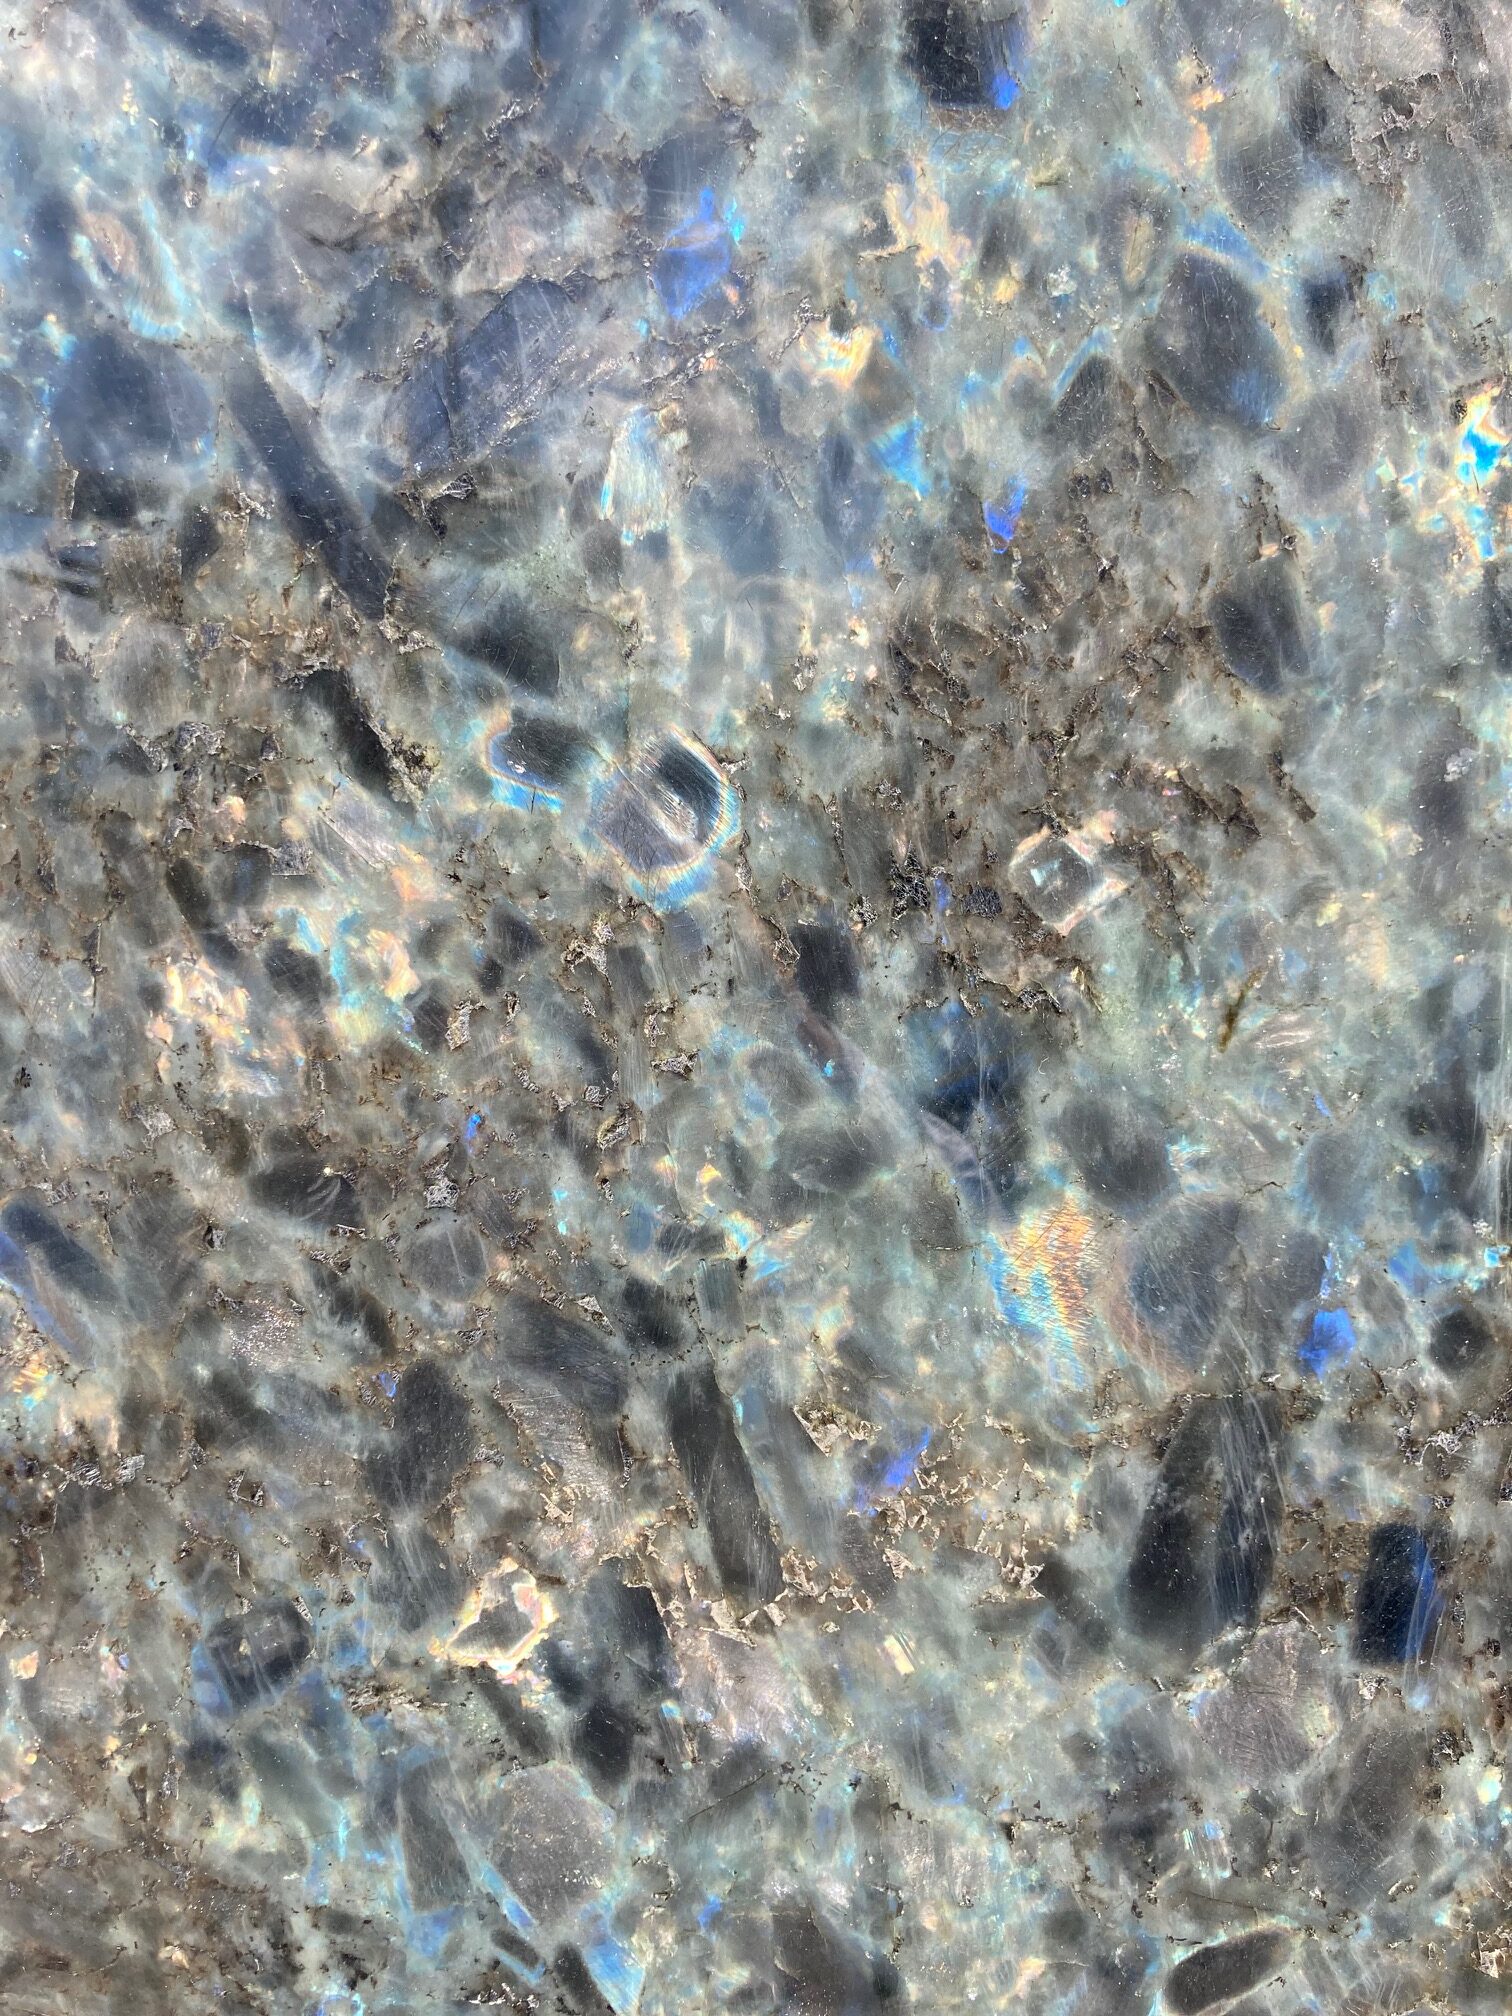 Lumerian Blue slab PS Granit Gdynia closeup 1